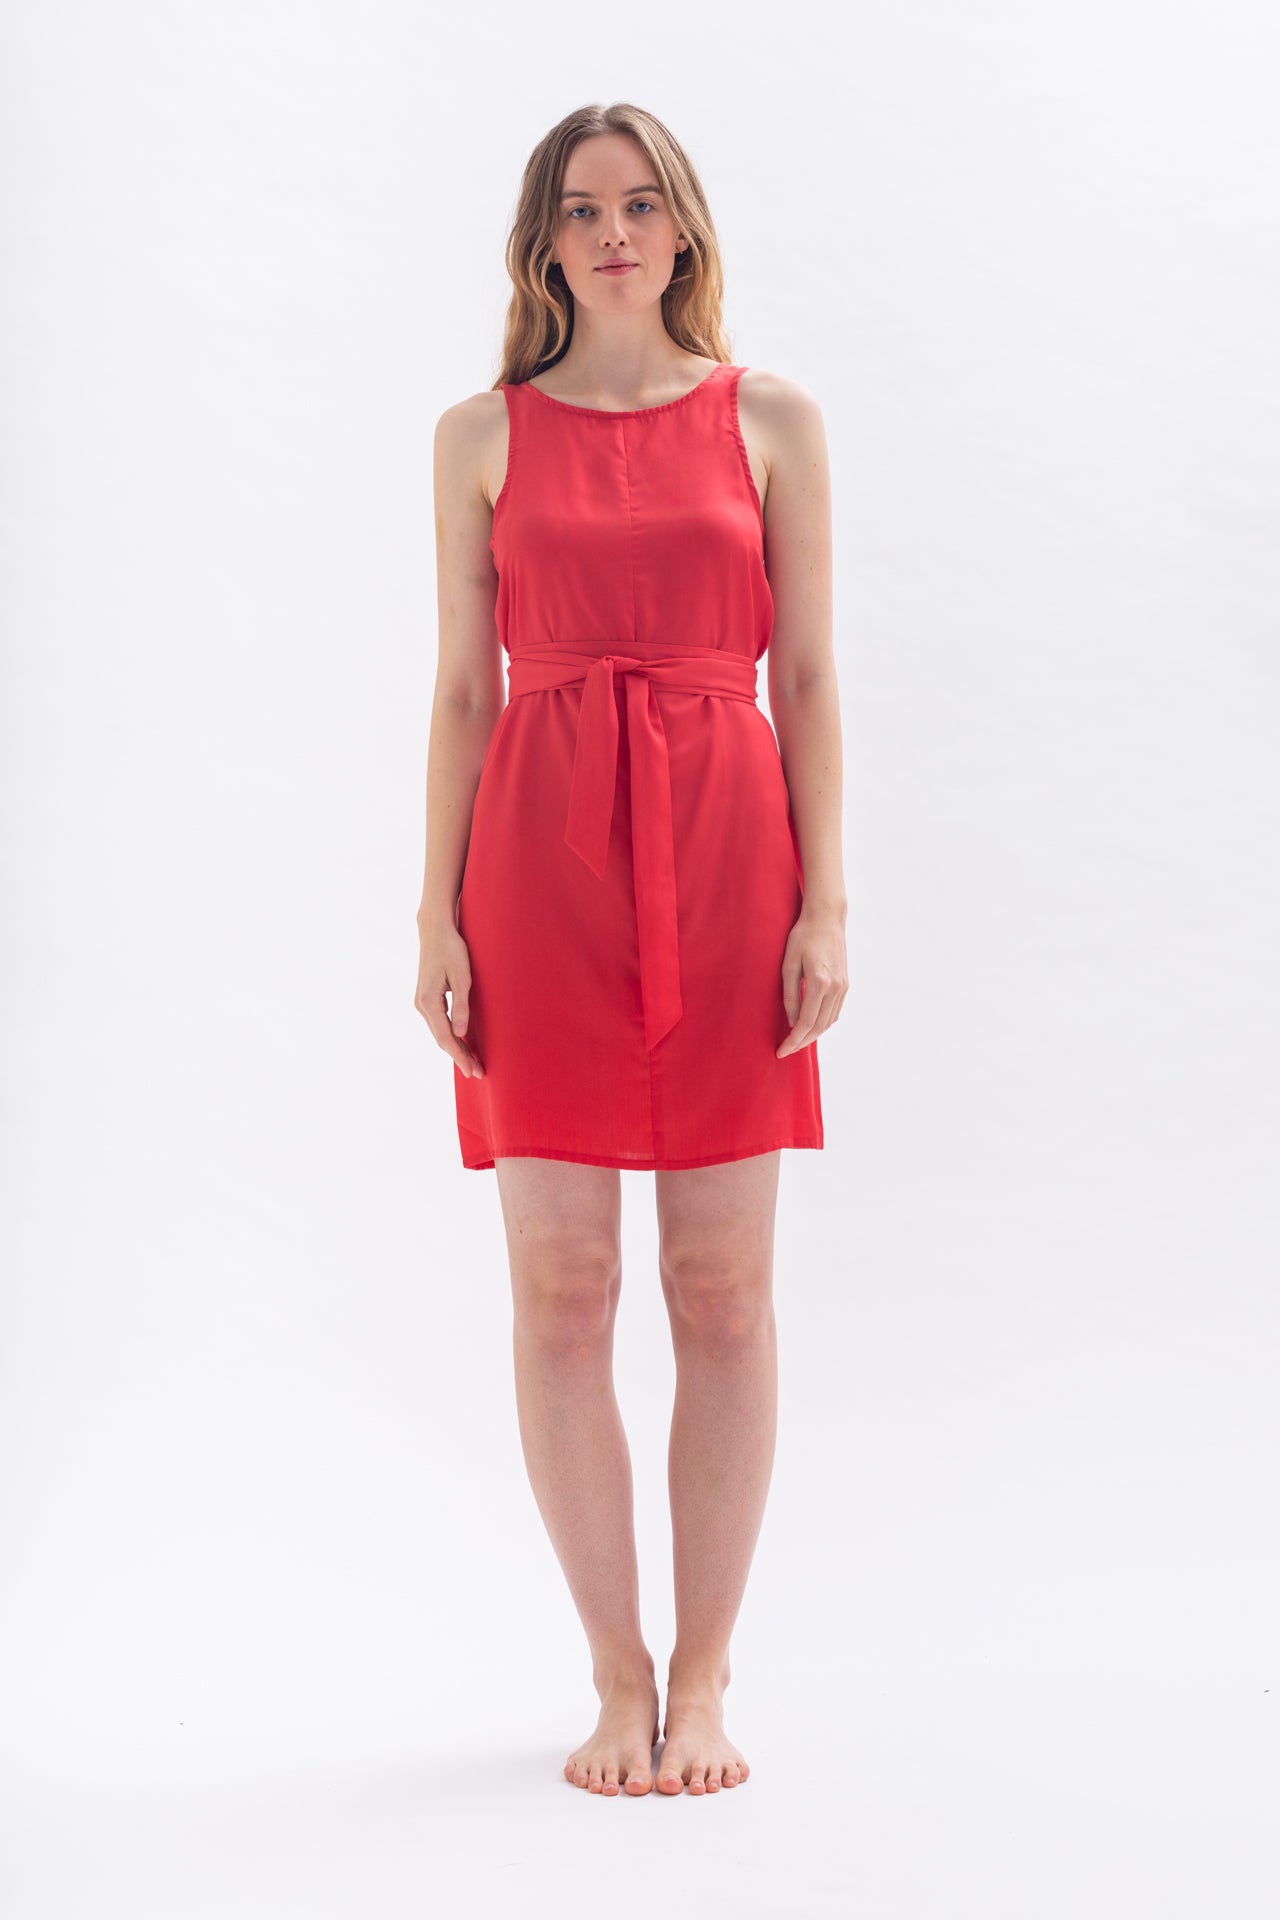 Knee-length "TULPINAA" dress in red made of Tencel